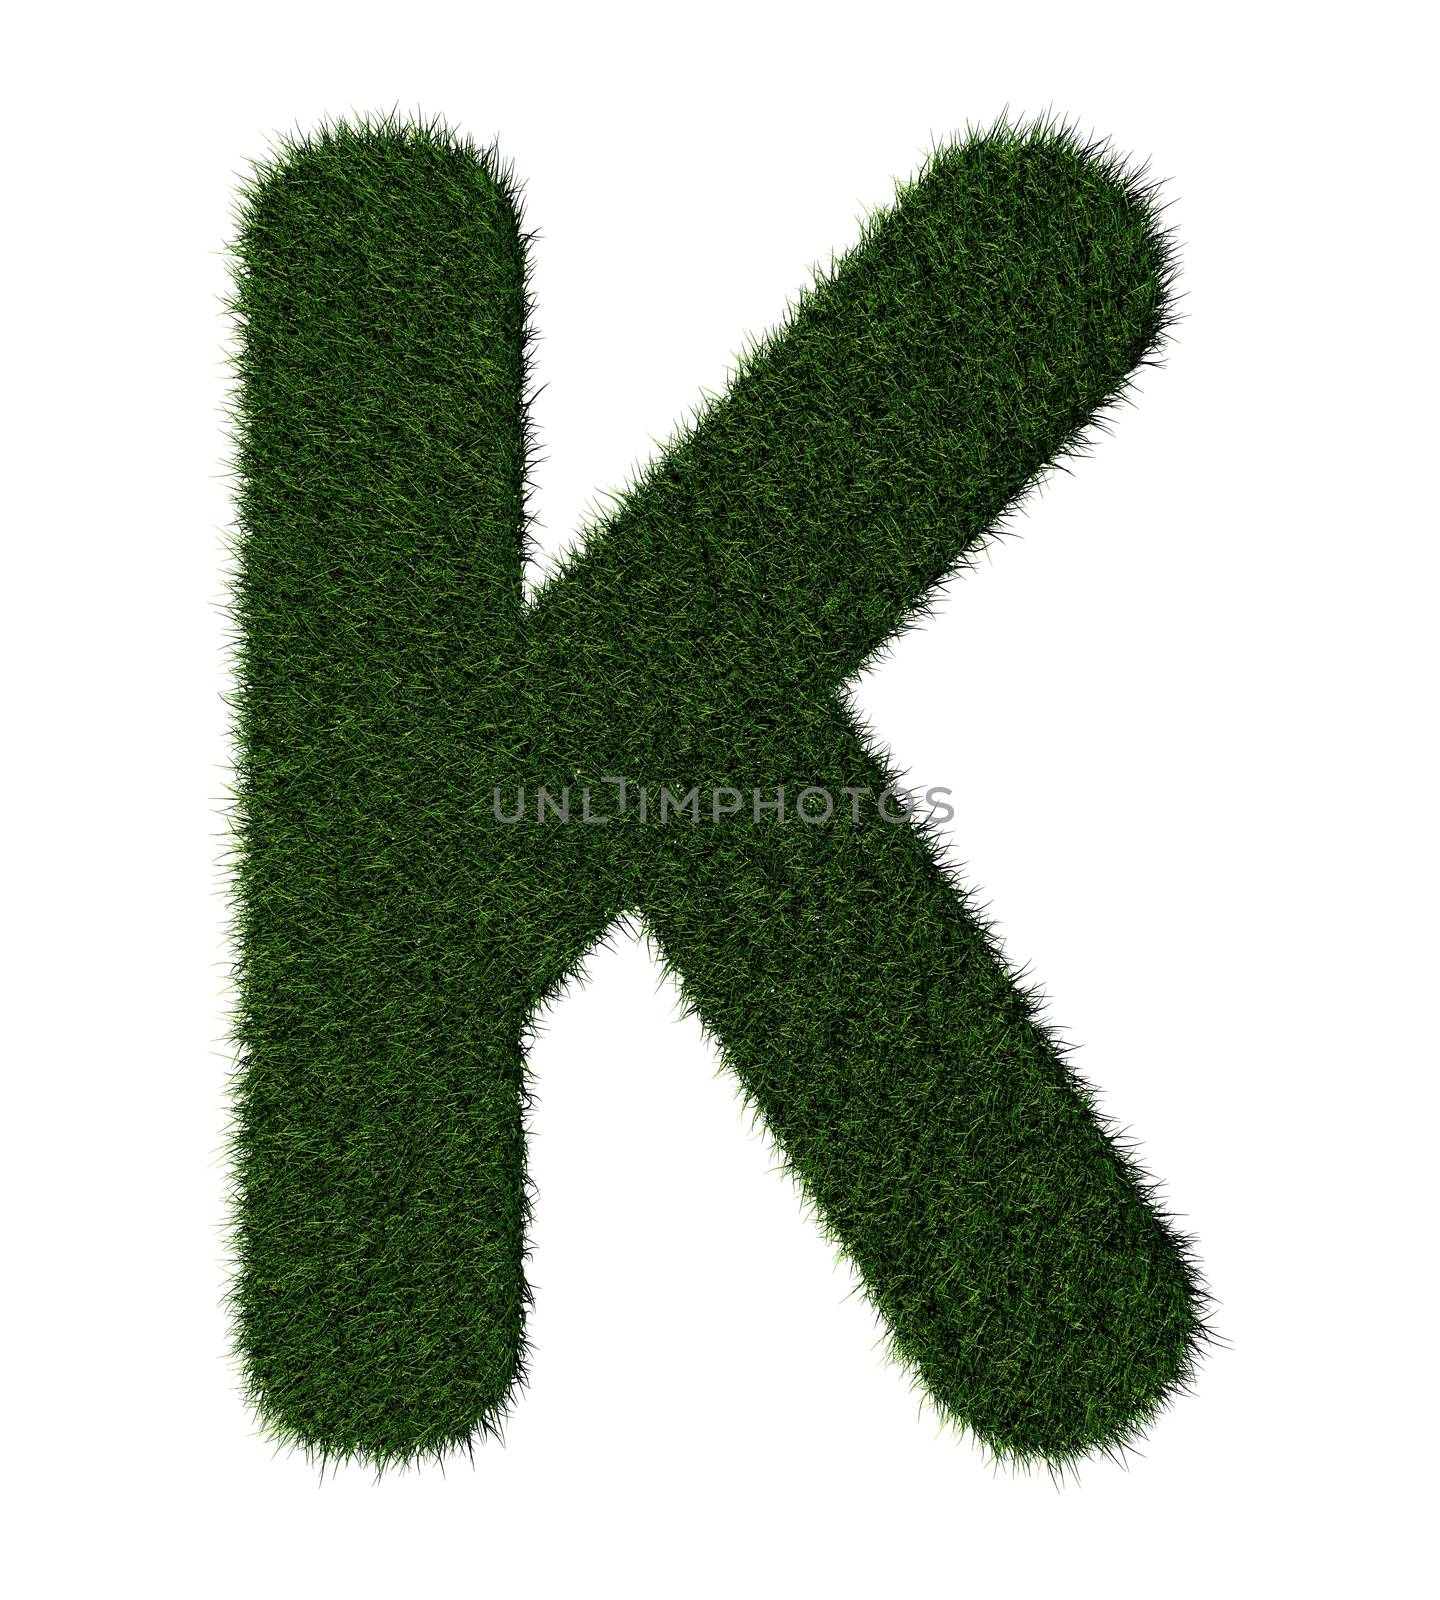 Grass alphabet - K by midani